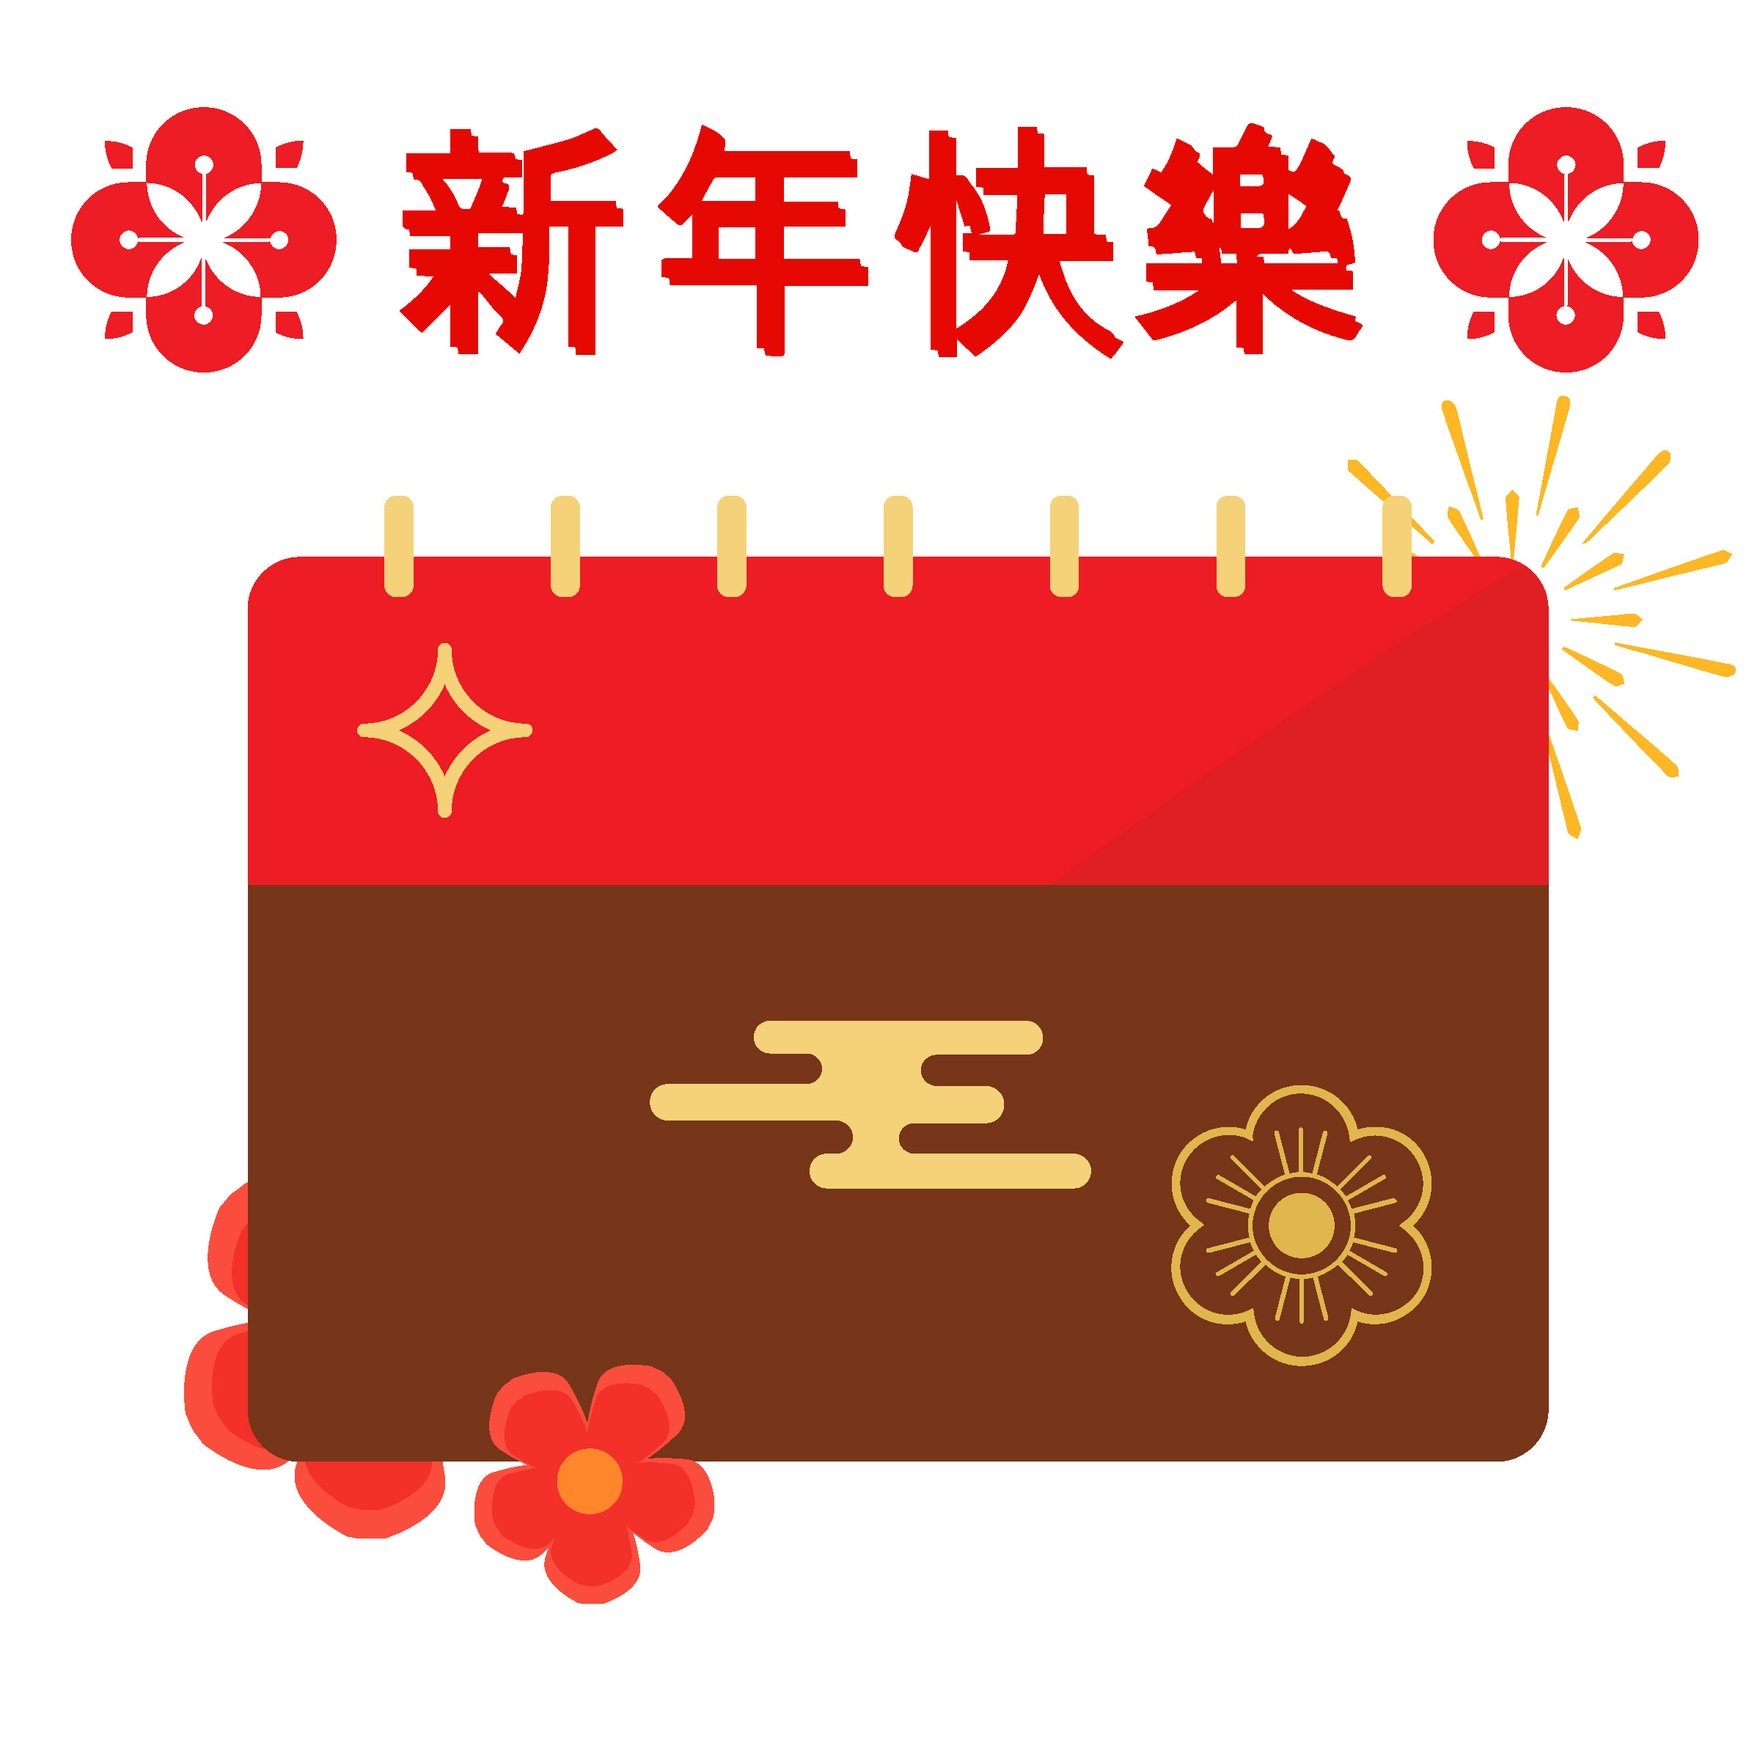 Chinese New Year Calendar Vector